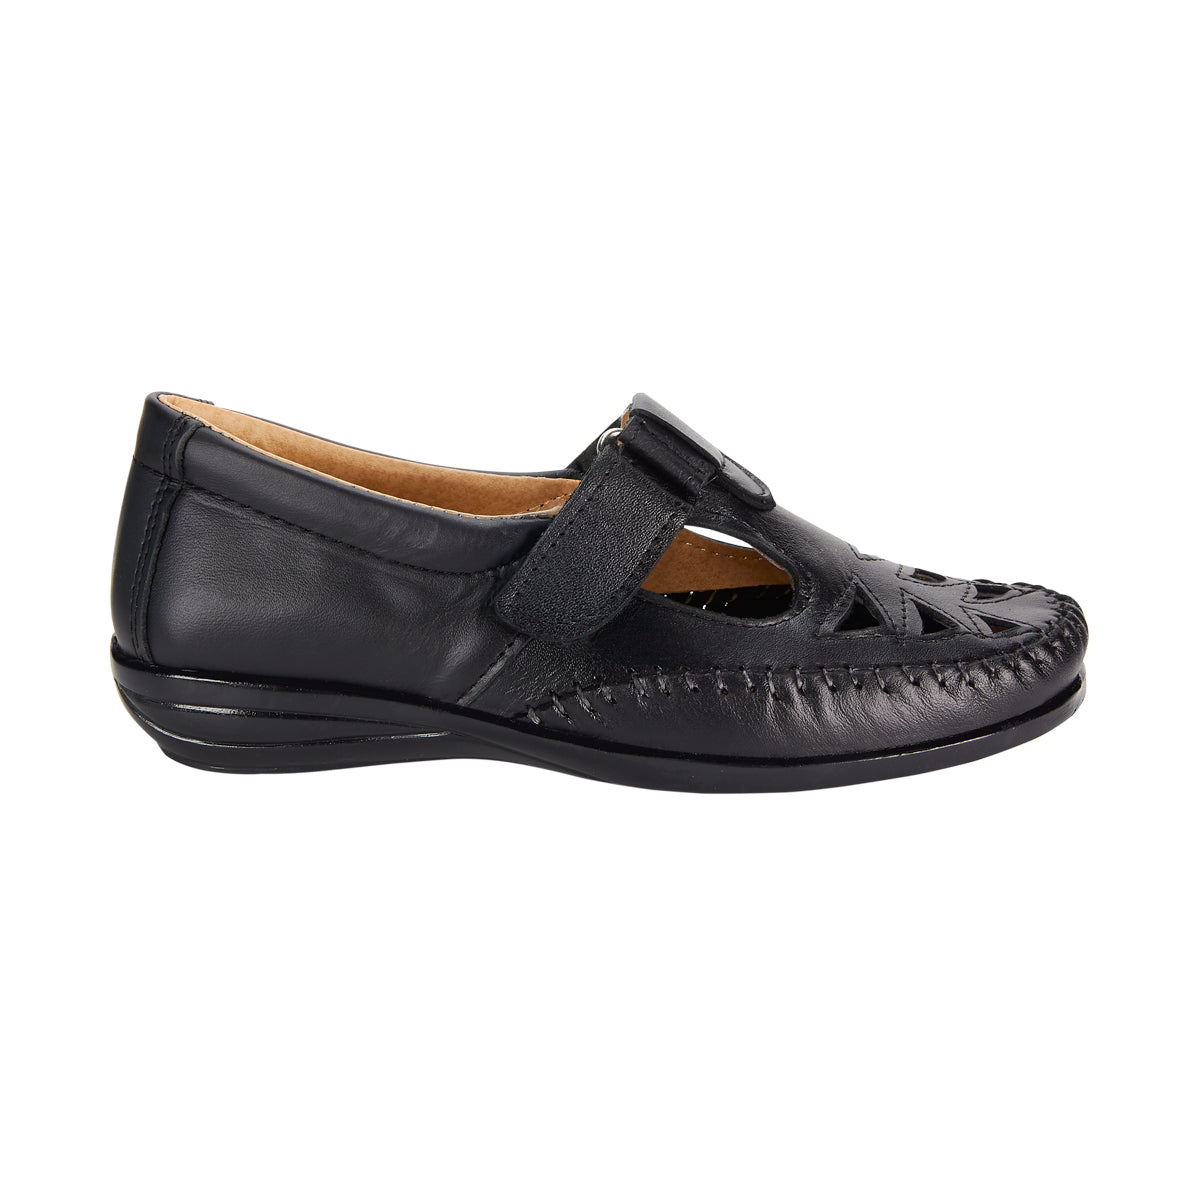 Zapato Confort Clasico Para Mujer CASTALIA 250-46 Negro Contactel Ajustable